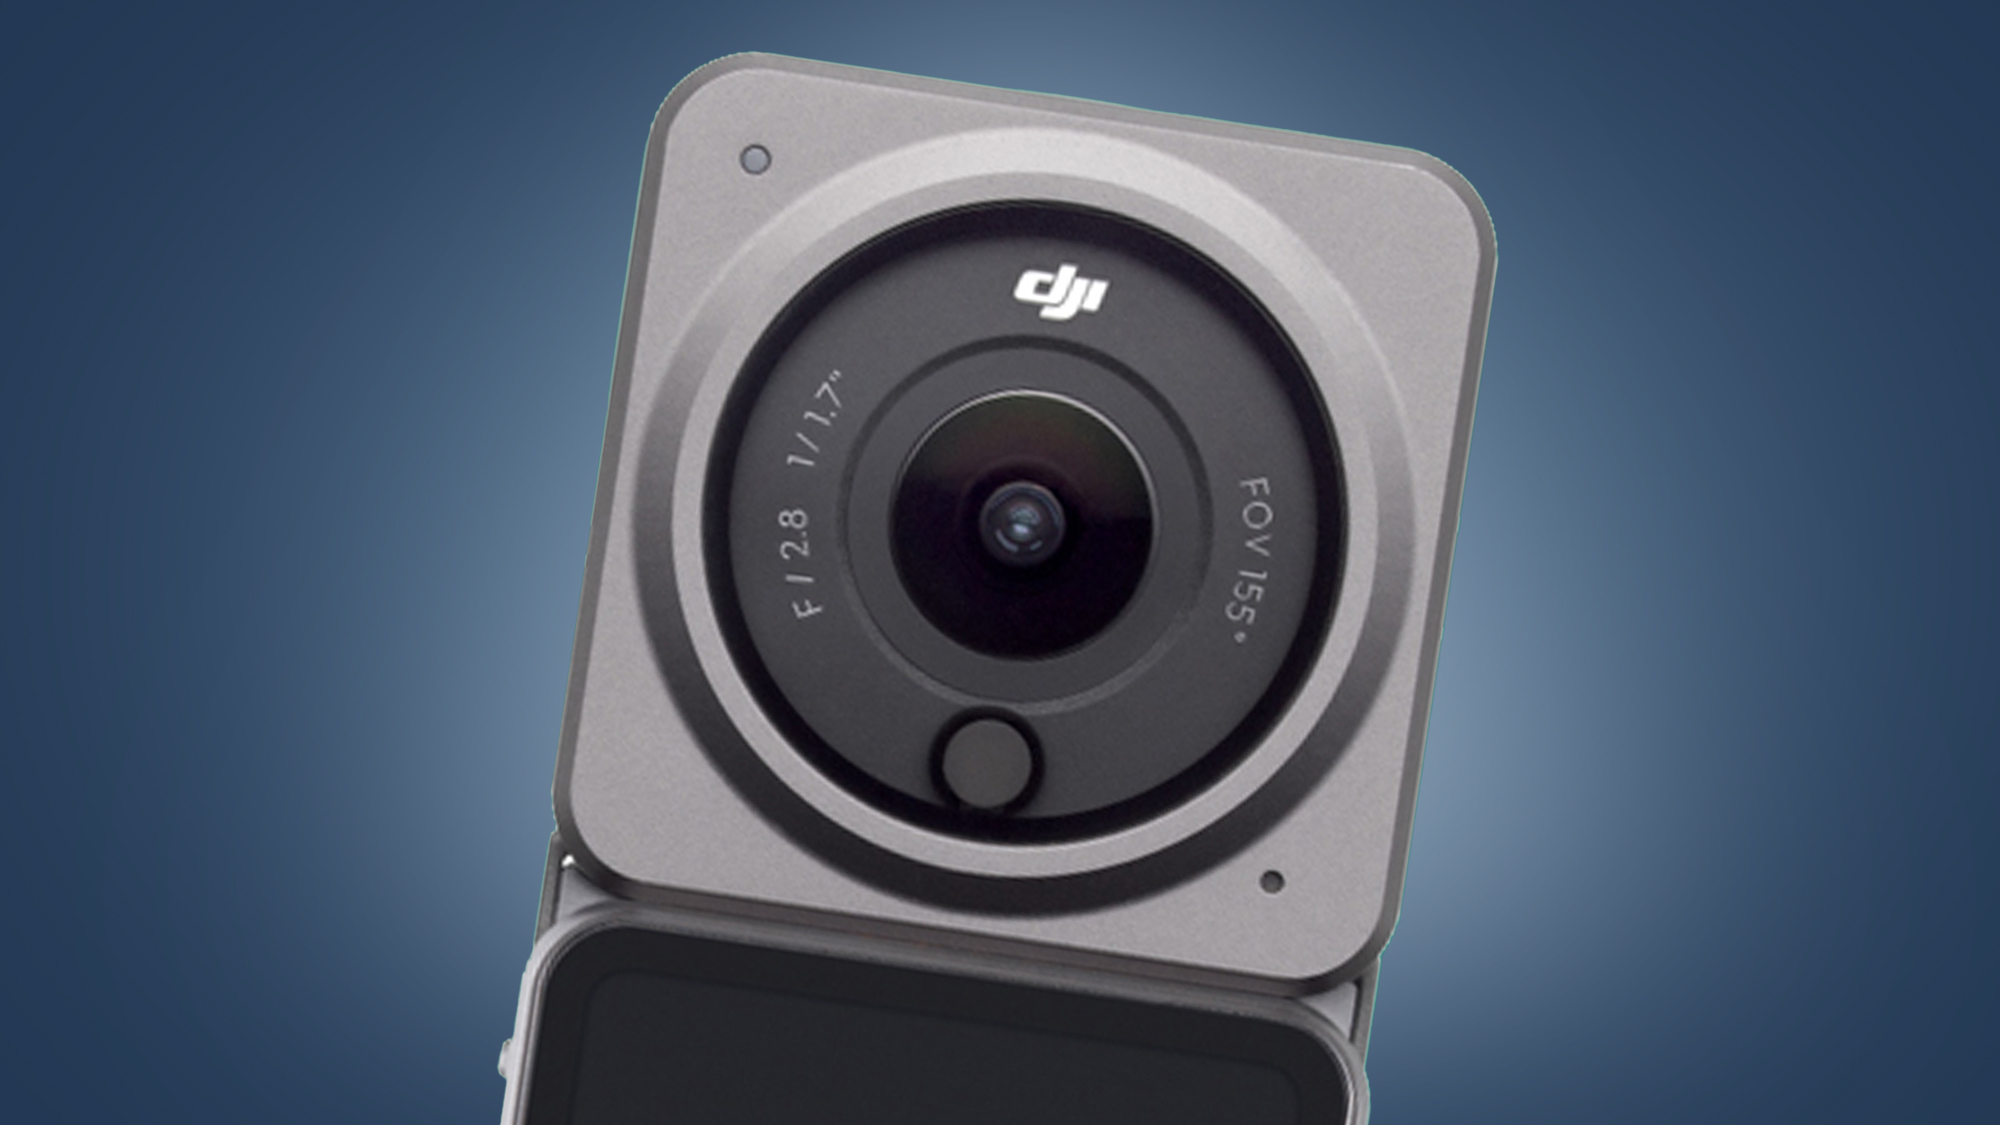 The DJI Action 2 экшн-камера на синем фоне